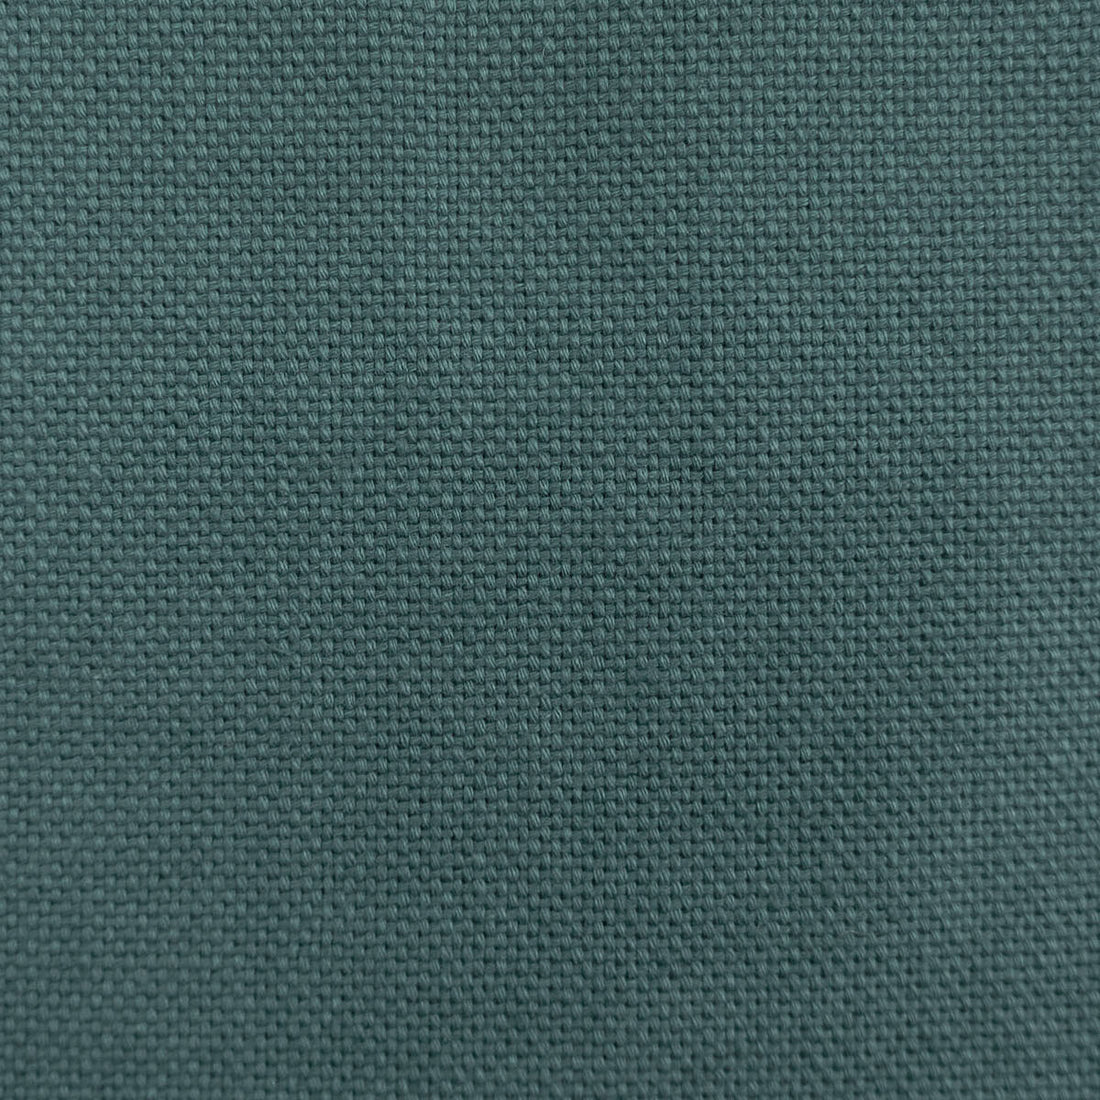 Dobra fabric in verde azulado color - pattern LCT1075.041.0 - by Gaston y Daniela in the Lorenzo Castillo VII The Rectory collection